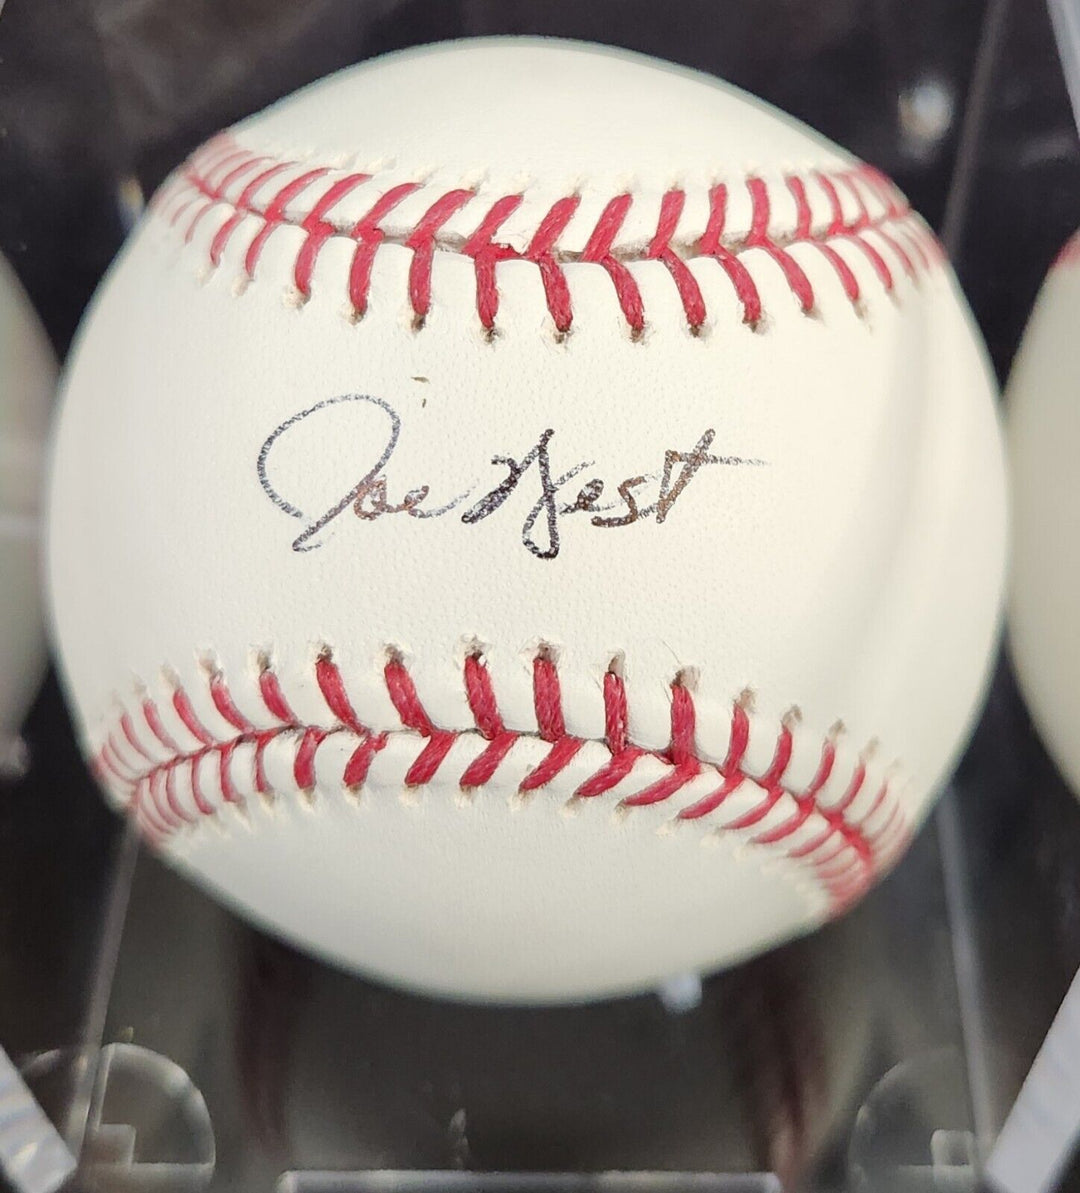 Joe West Signed Major League Baseball JSA COA 44 Years In MLB Umpired 5460 Games